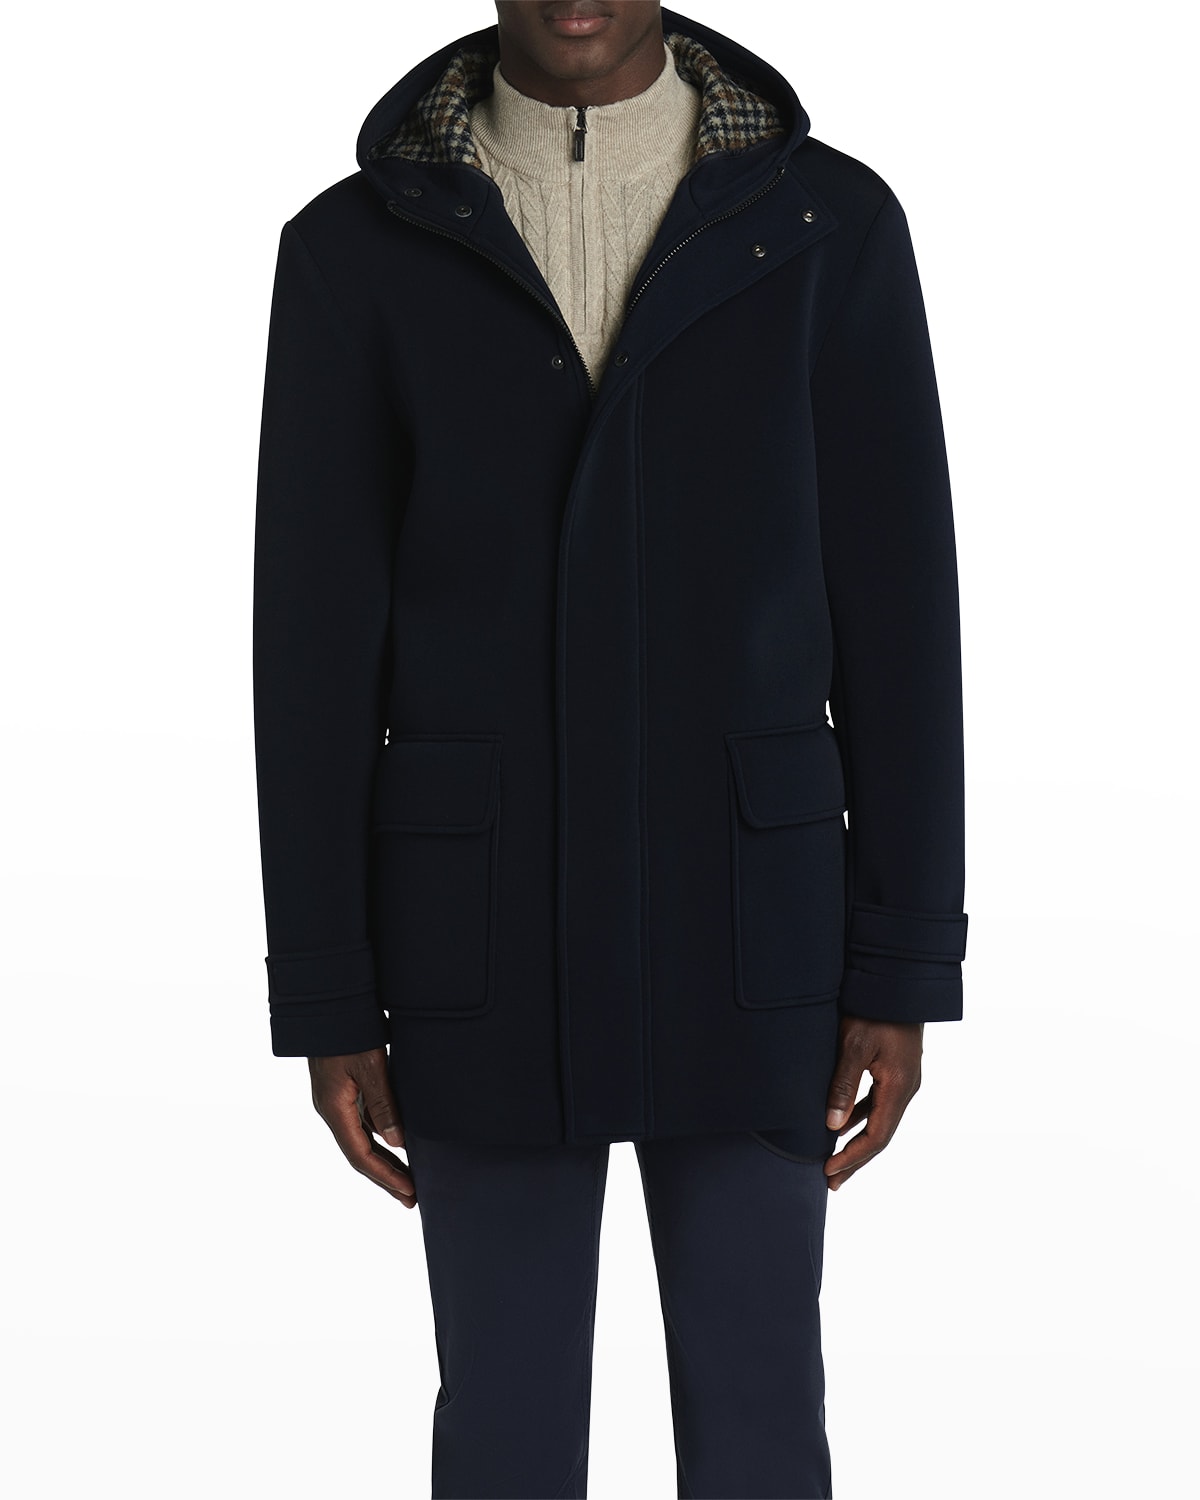 Canali Men's Plaid Wool Sport Jacket | Neiman Marcus